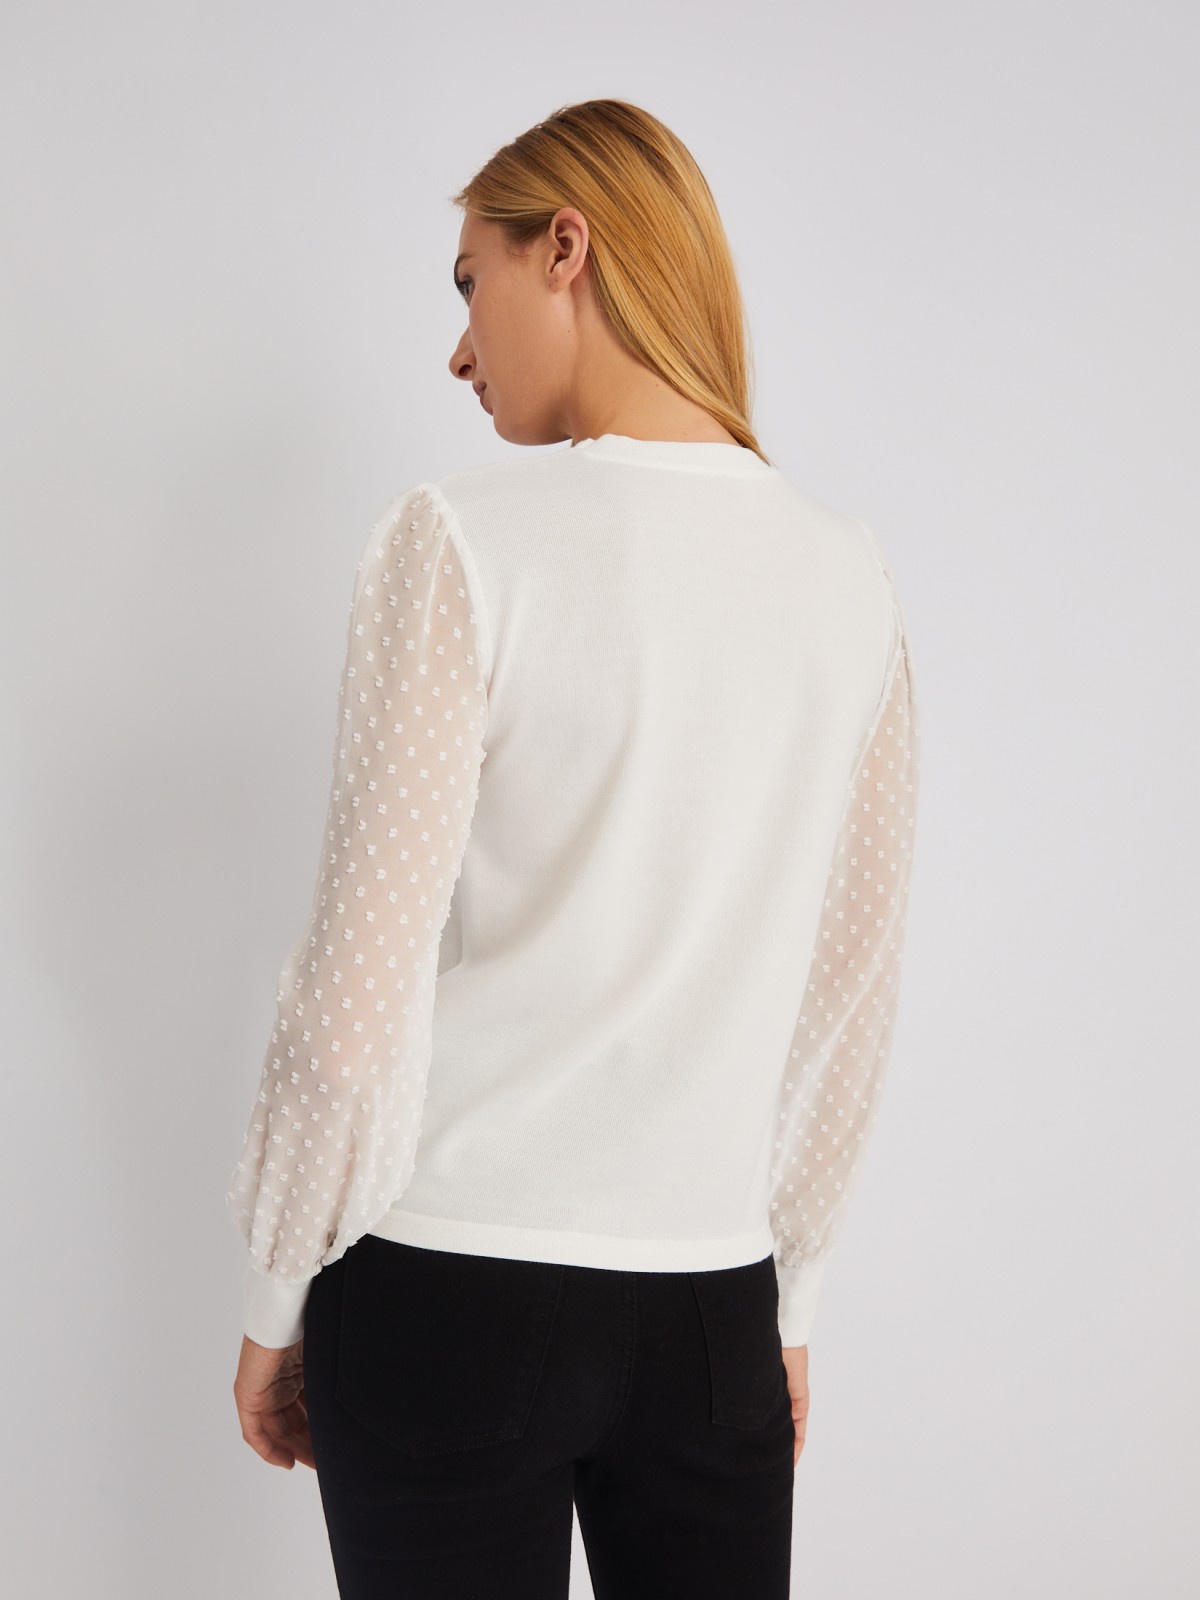 Трикотажный топ-блузка с акцентом на рукавах zolla 024113126023, цвет белый, размер XS - фото 6